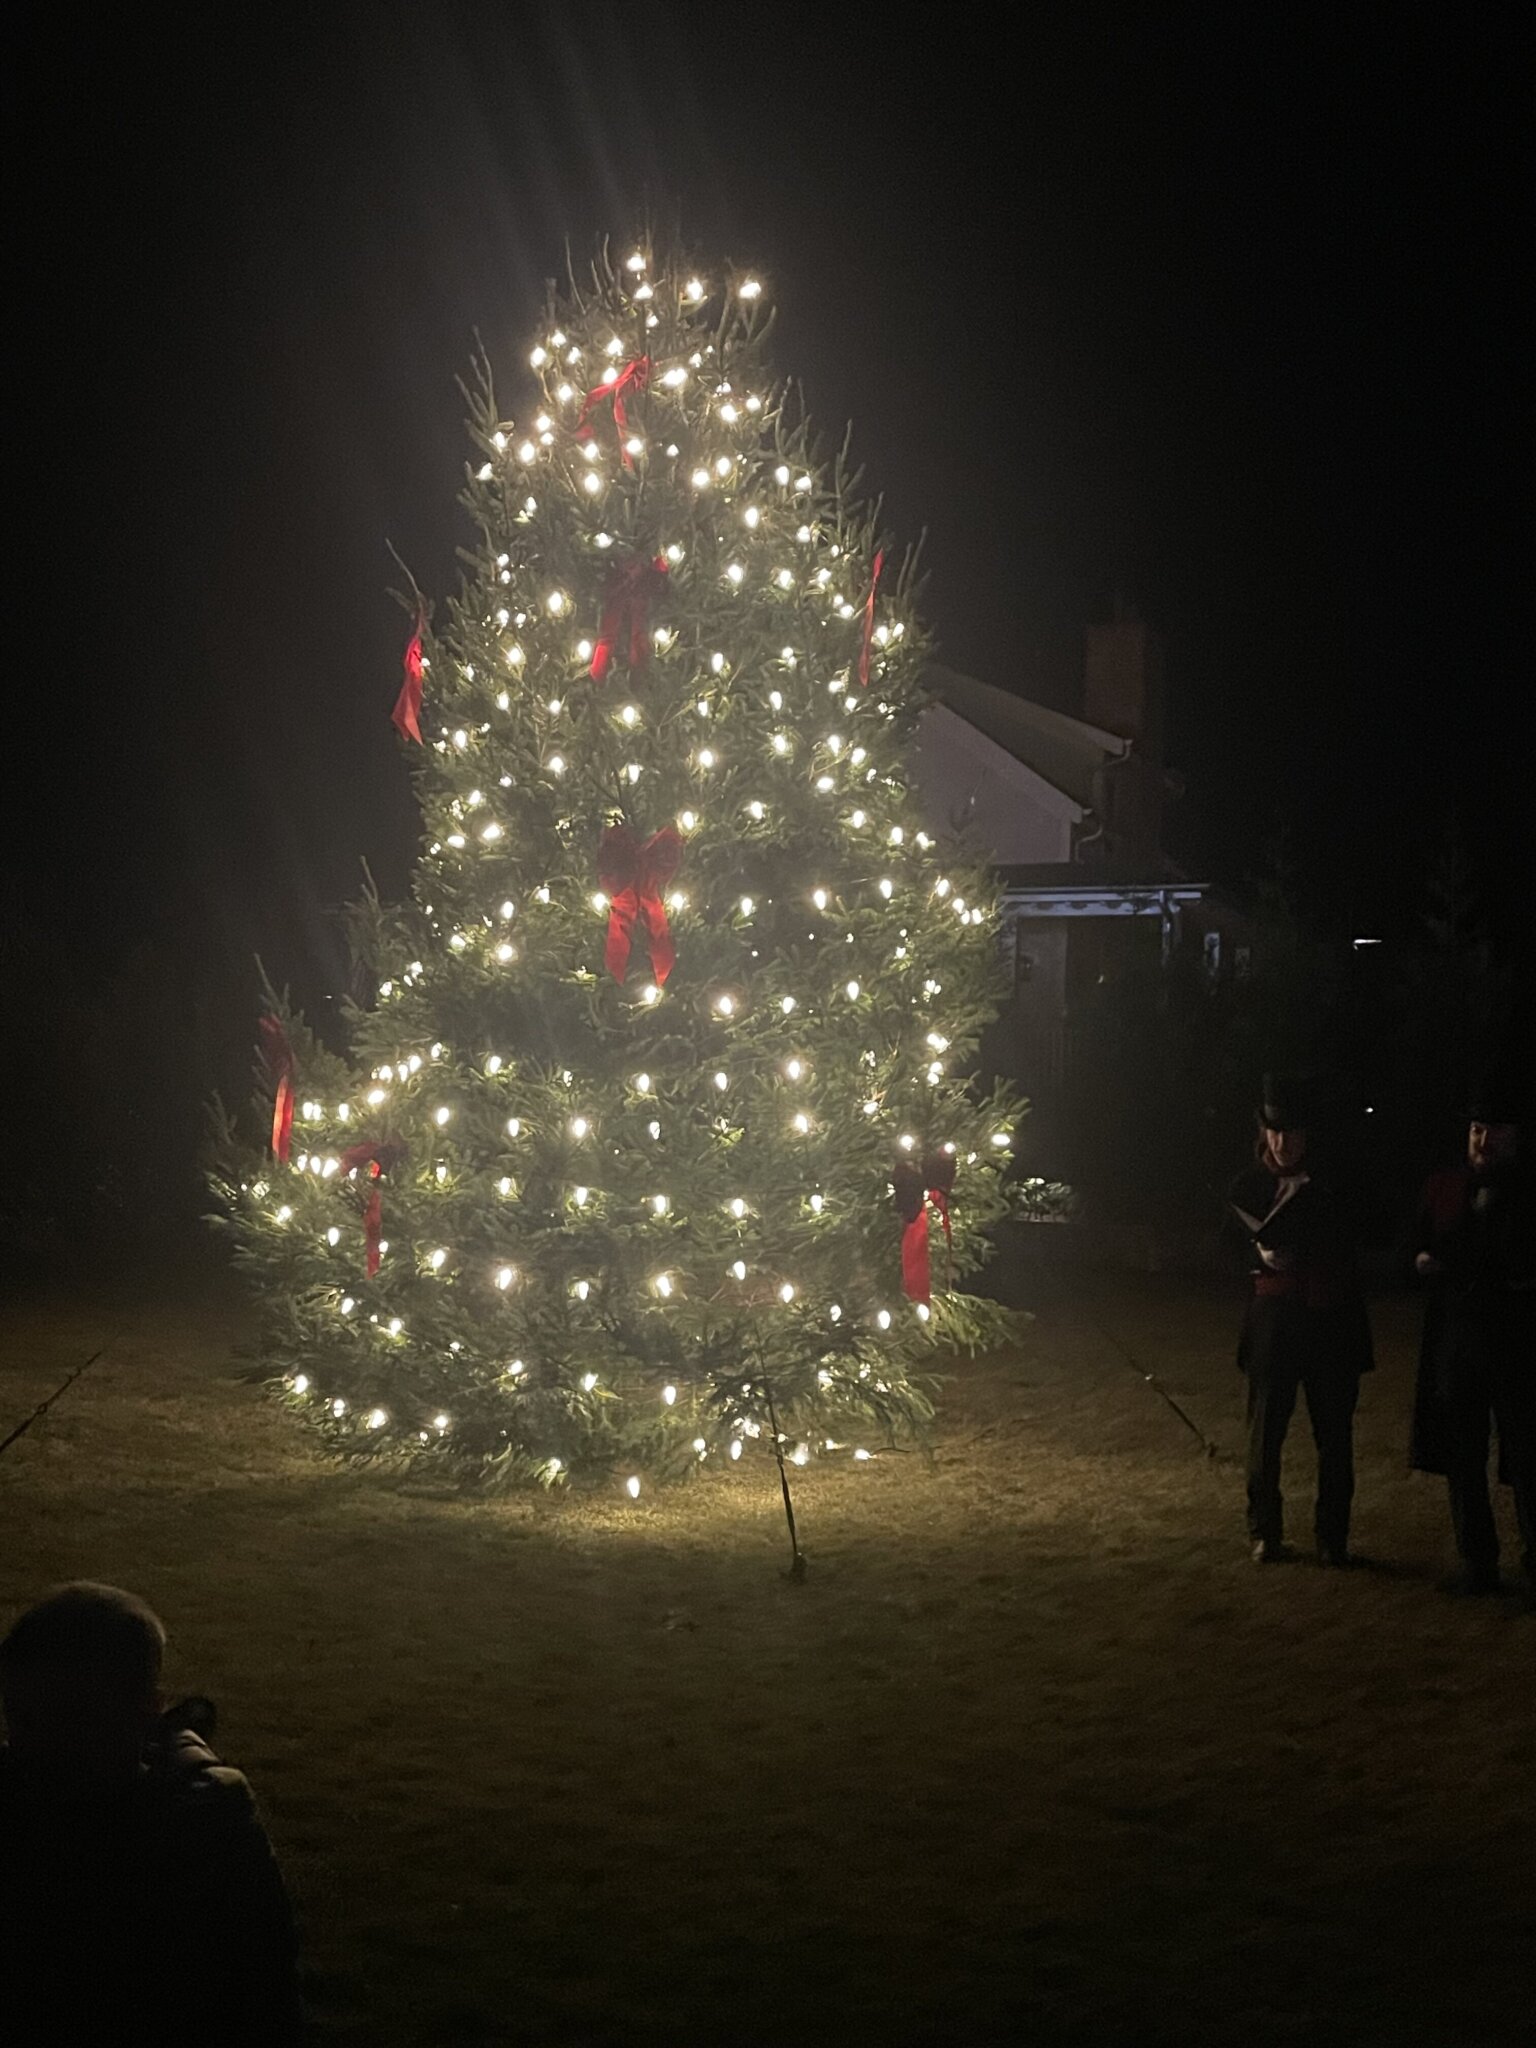 Canoe Place held a festive tree lighting on Friday, December 1 in Hampton Bays